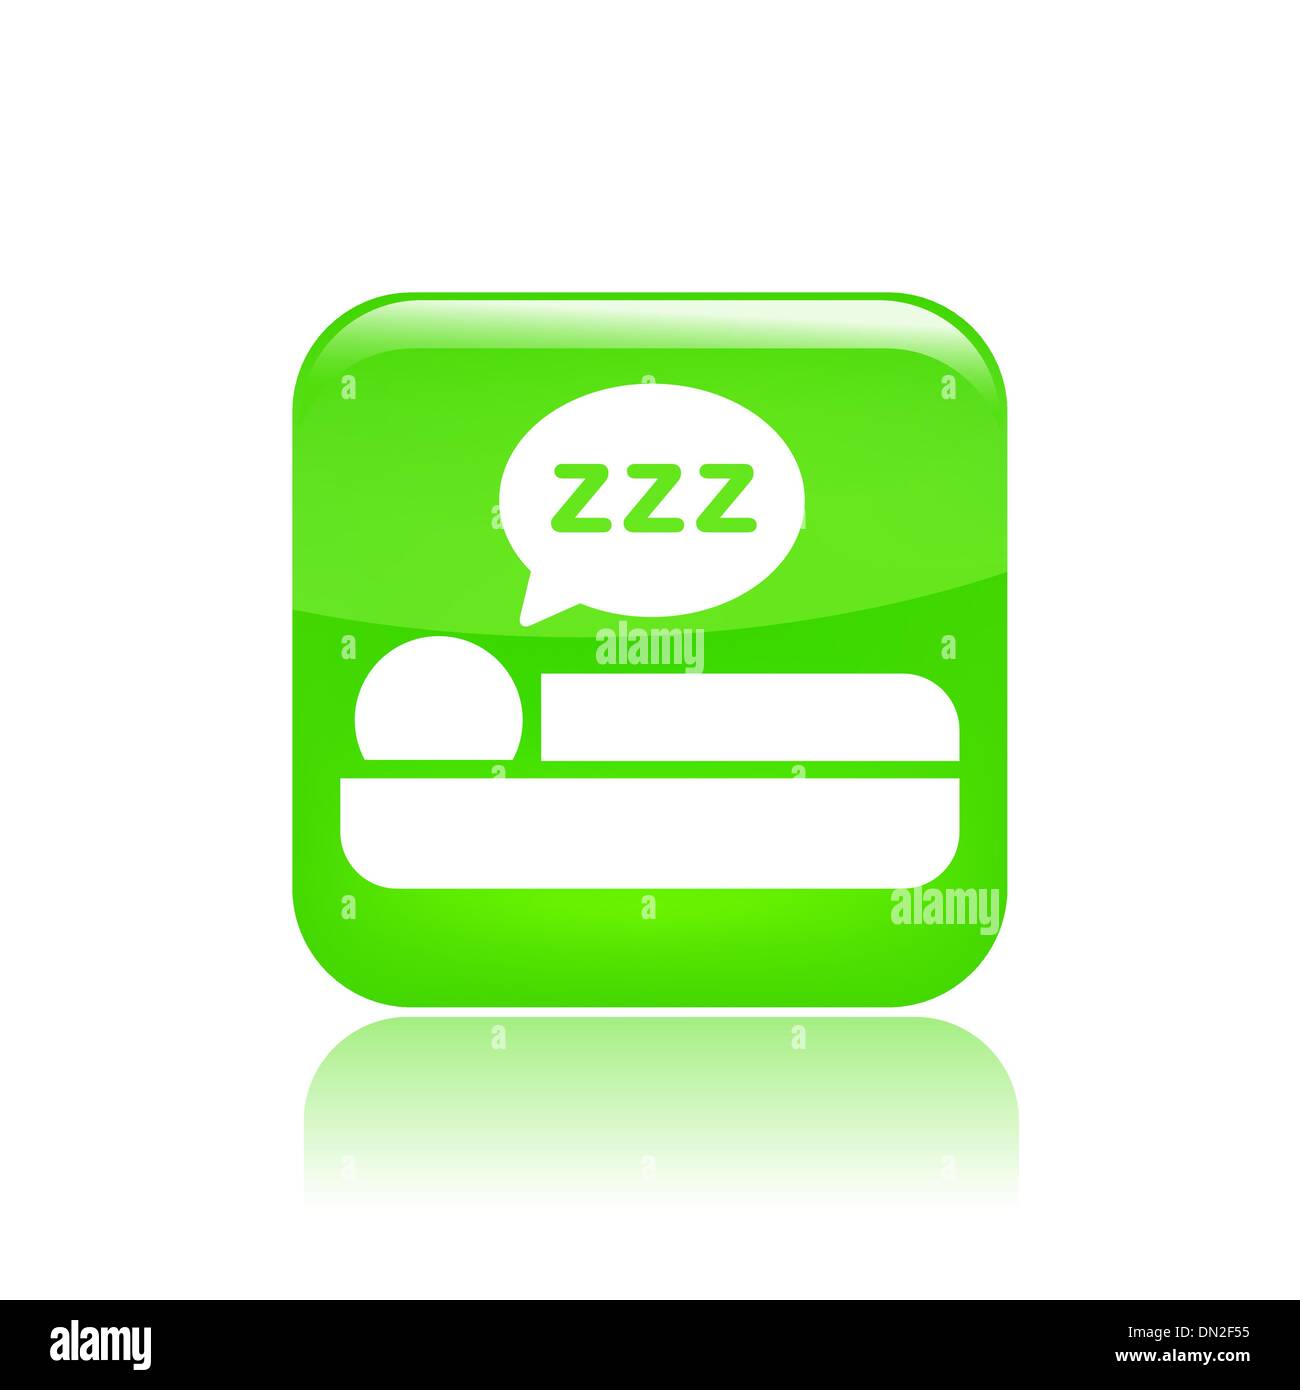 Vector illustration of single sleep icon Stock Vector